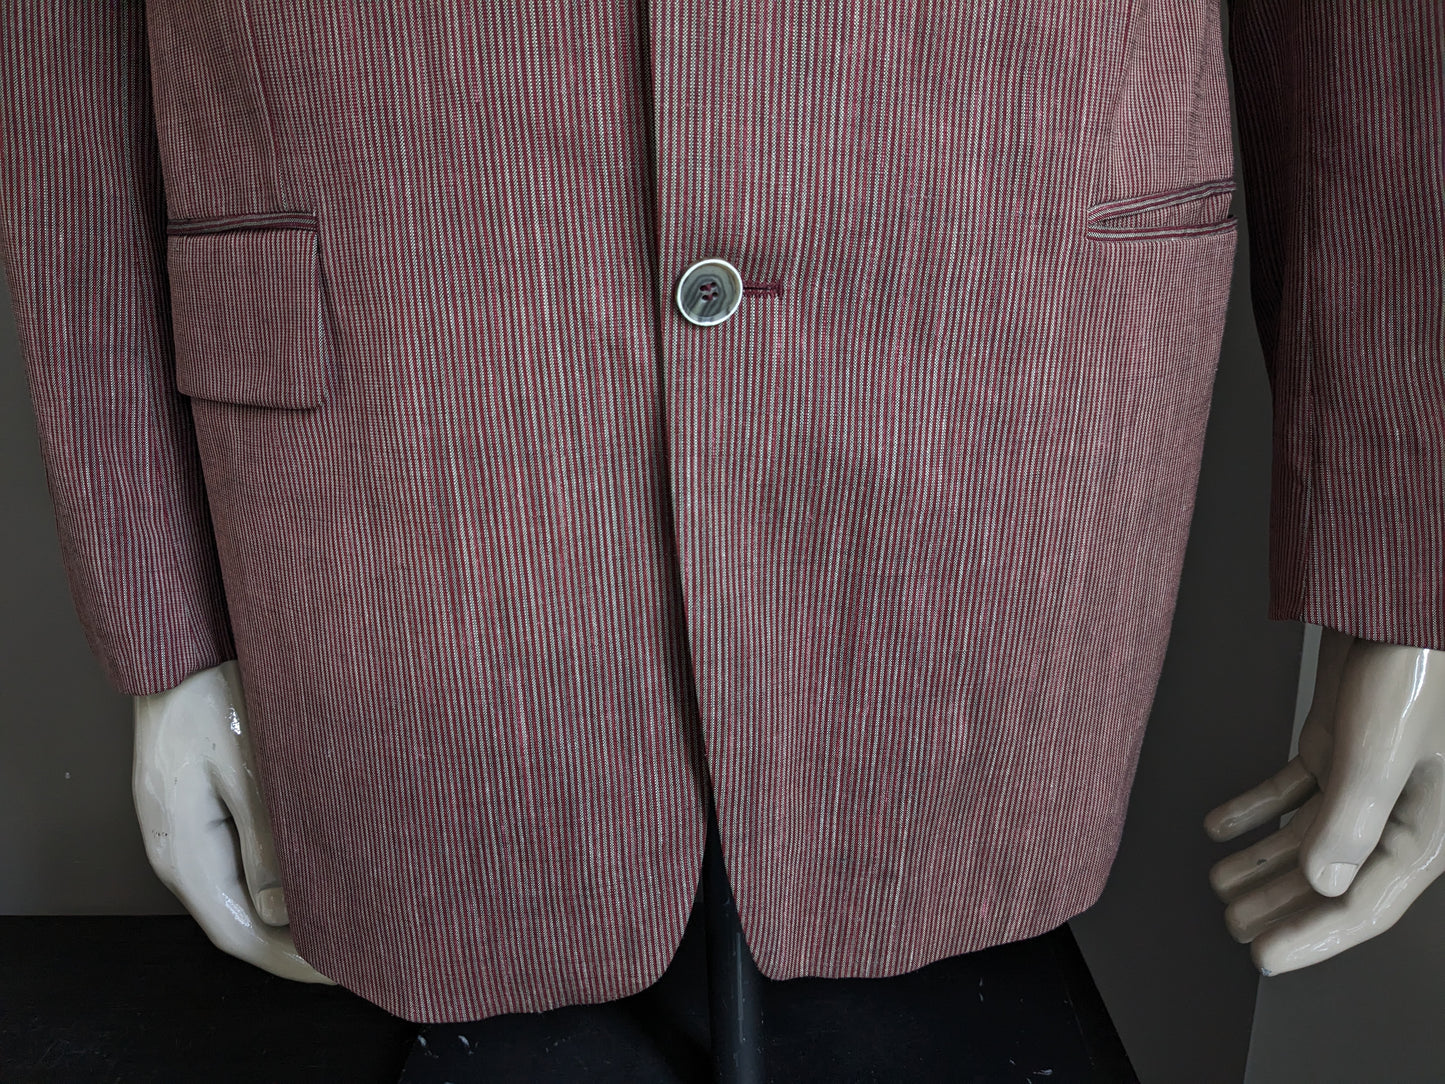 Bogart wool linen silk jacket. Gray red striped. Size 52 / L.